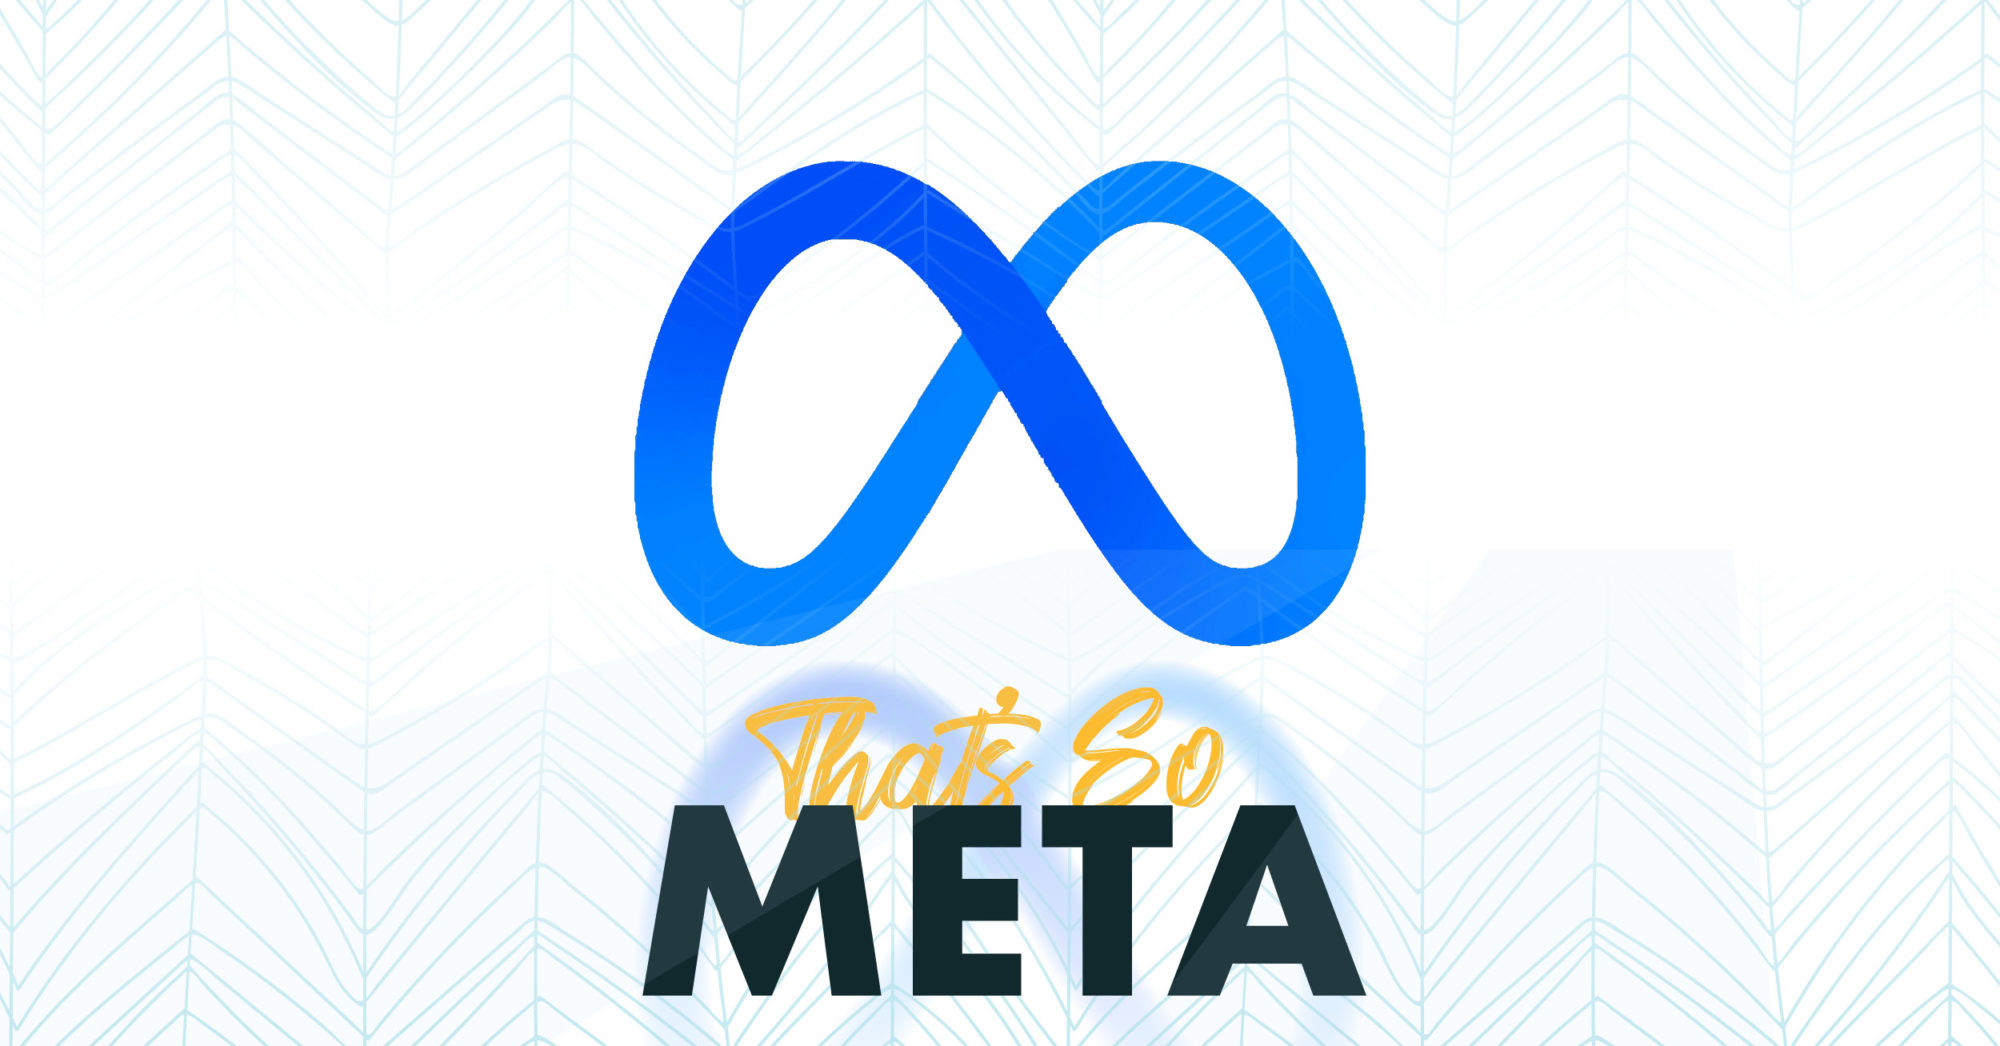 Meta logo on a white background with the text, "That's so Meta"